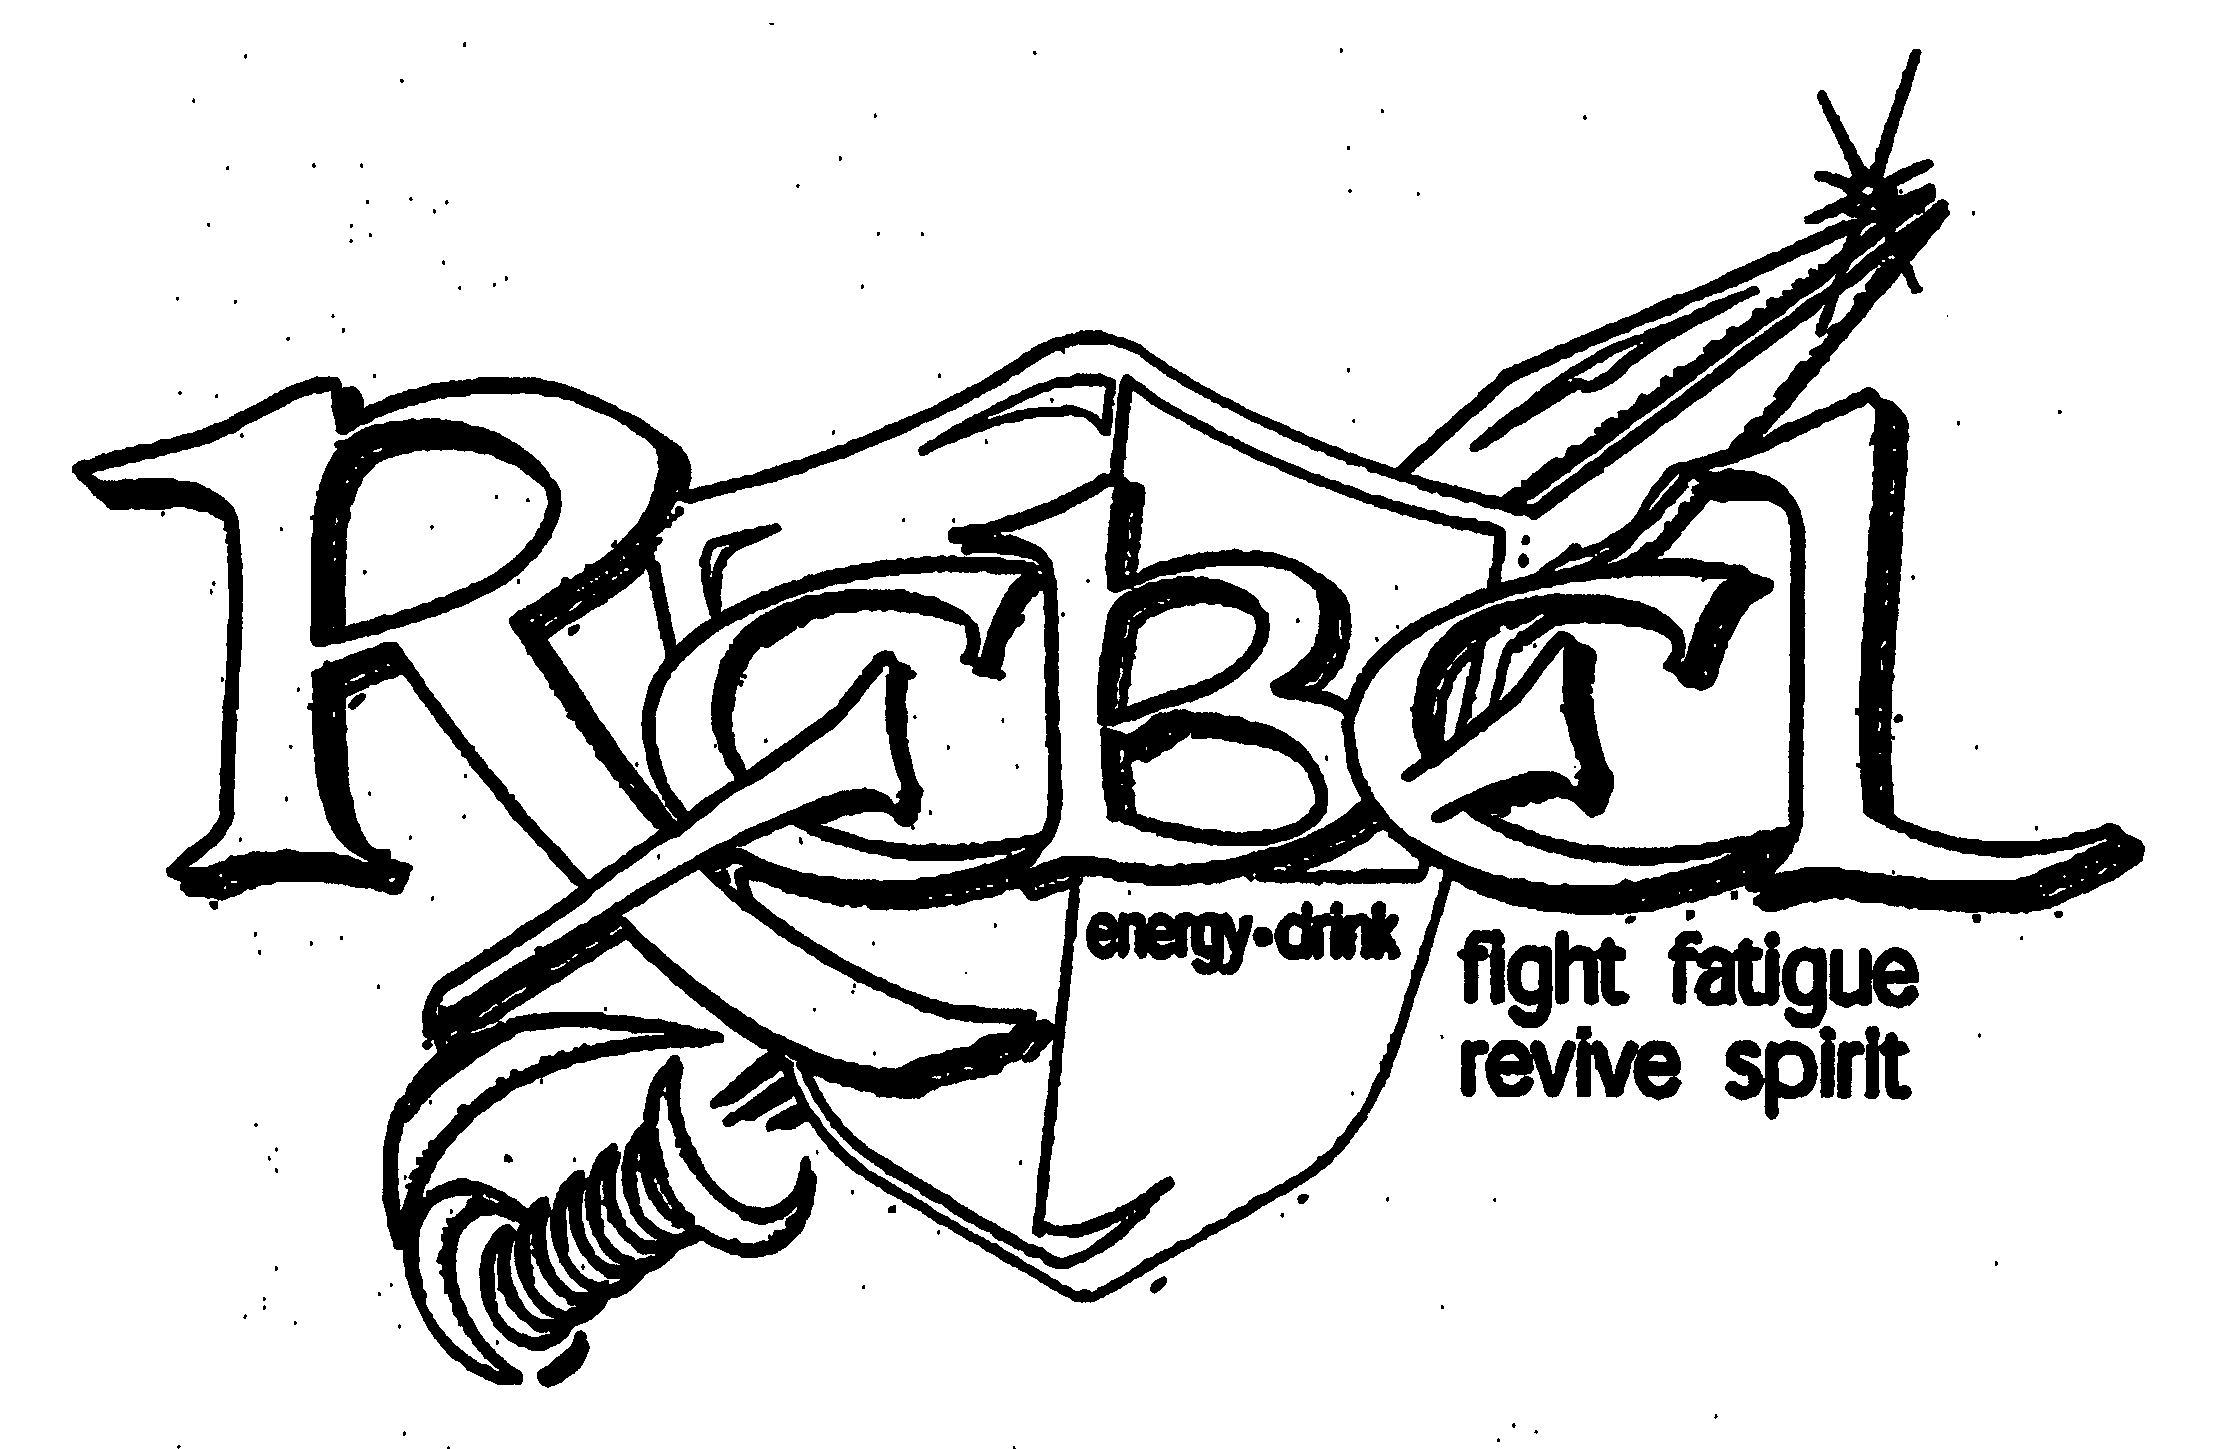  REBEL ENERGY-DRINK FIGHT FATIGUE REVIVE SPIRIT